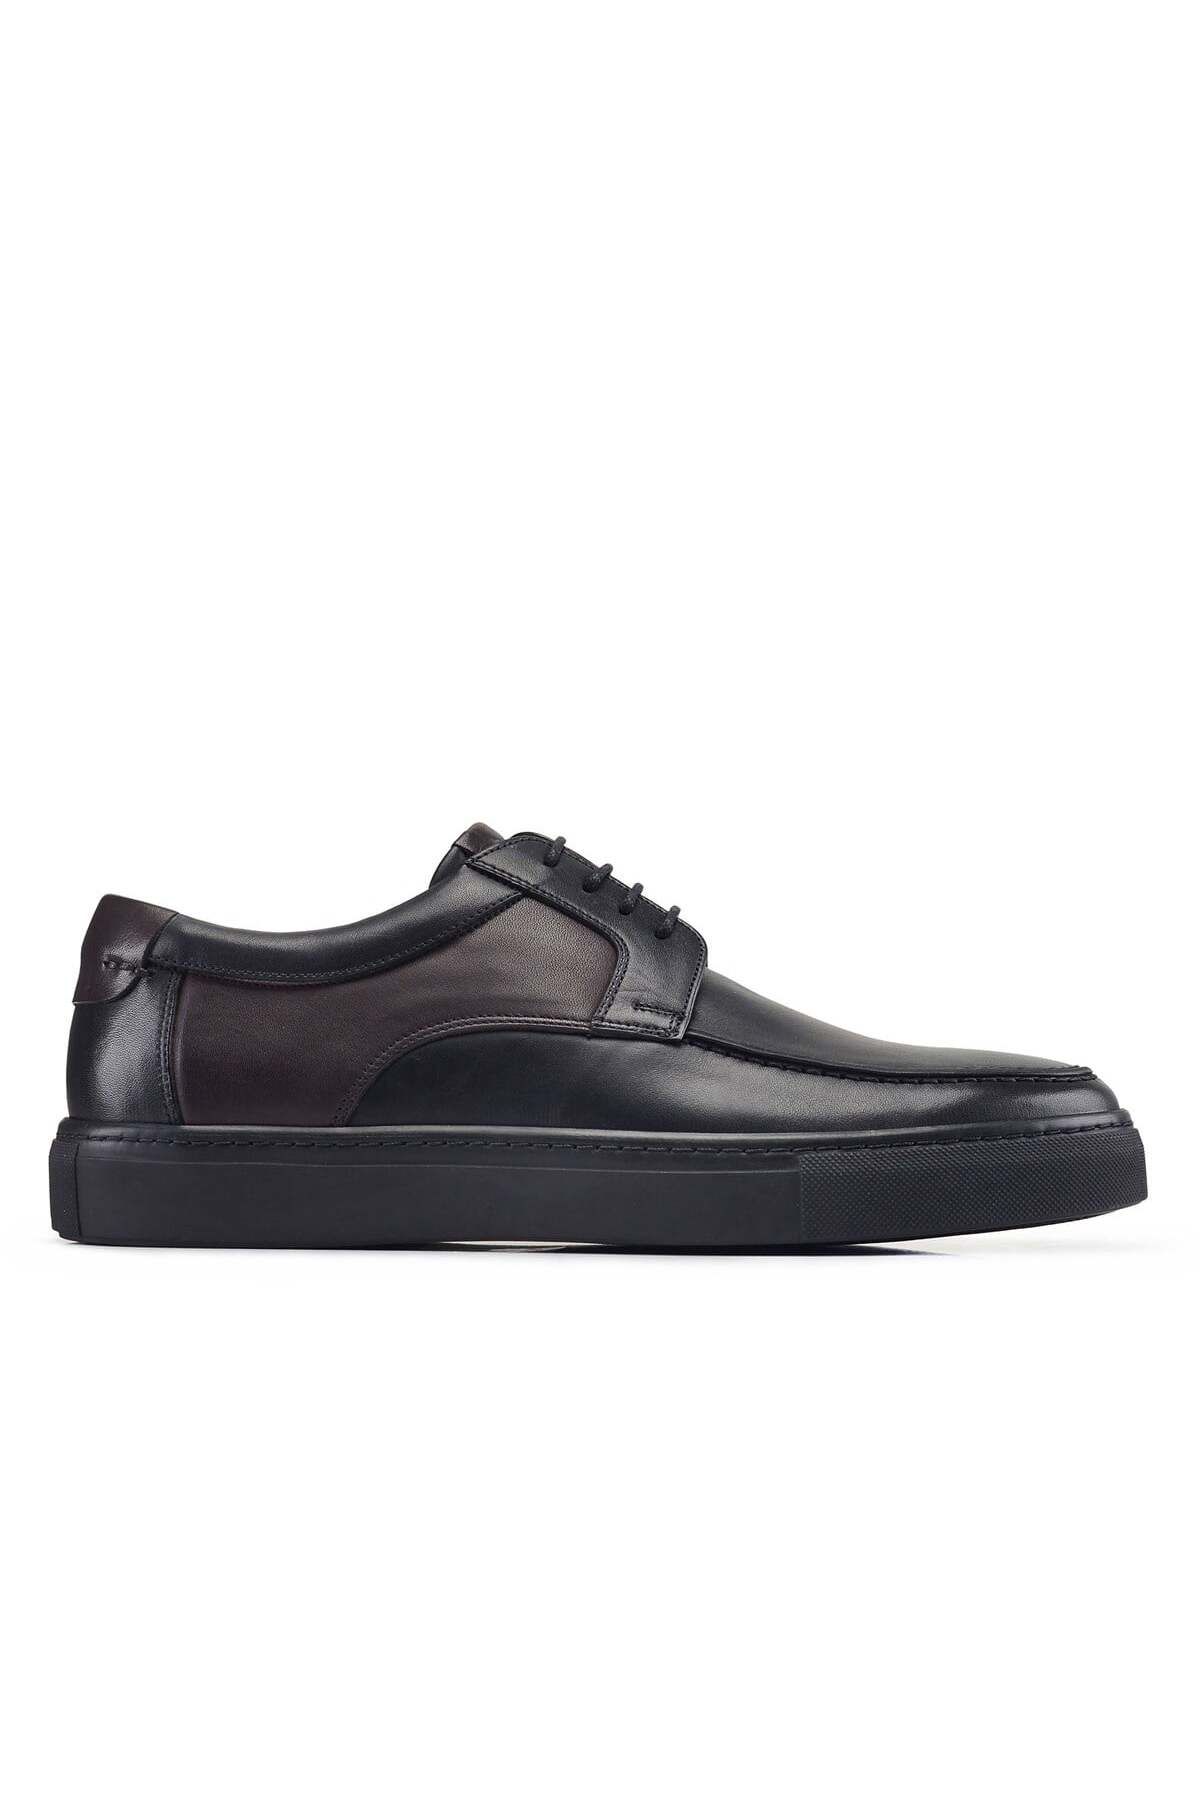 Nevzat Onay Siyah Bağcıklı Sneaker -10221